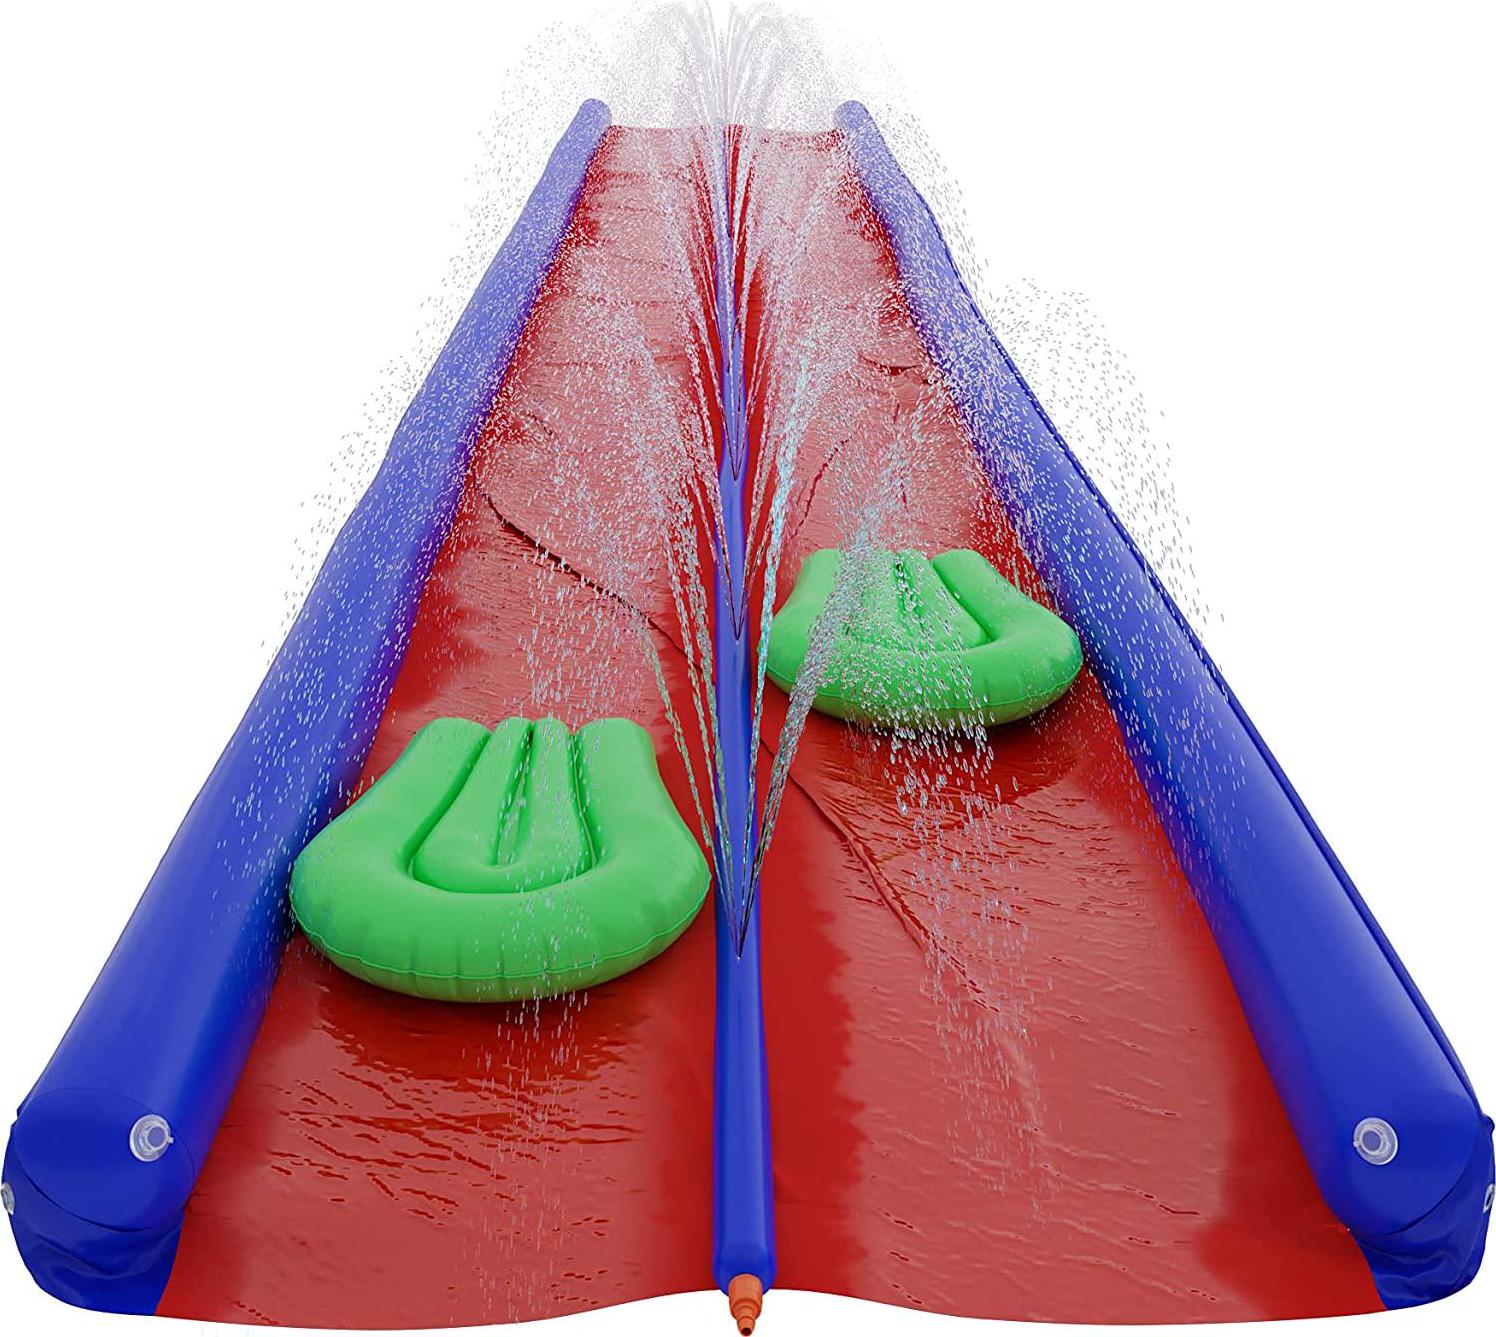 stargo, Giant Backyard Water Spraying Slip and Slide, 25 Feet Slide with 2 Inflatable Sliding inflatables with Built in Sprinkler, Outdoor Sprinkler and Slide